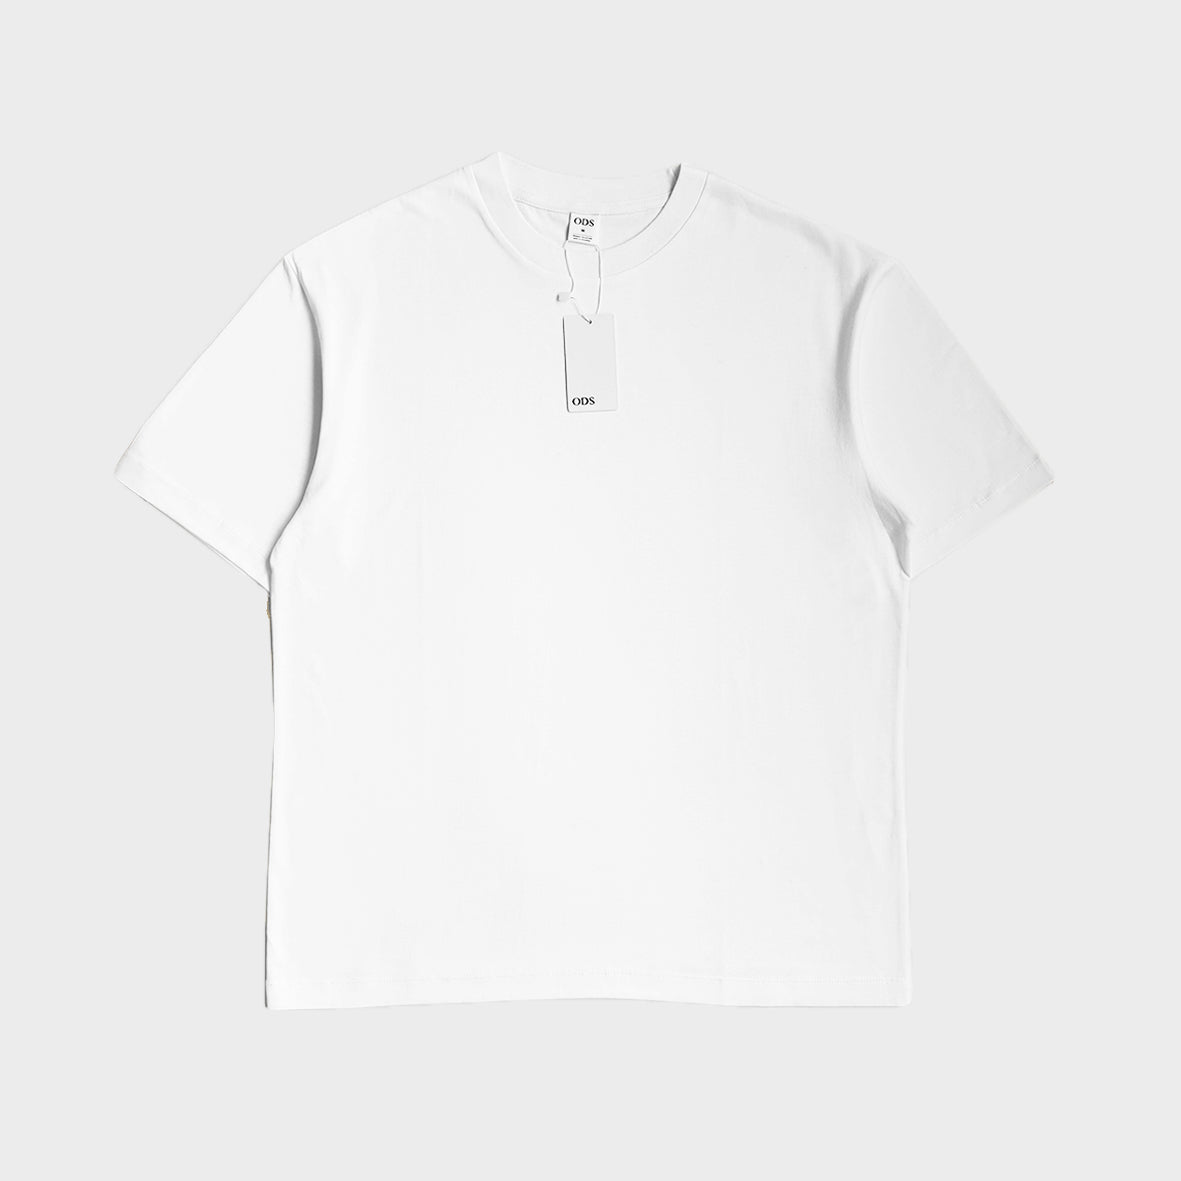 3.0 Oversized T Shirt - White's Code & Price - RblxTrade